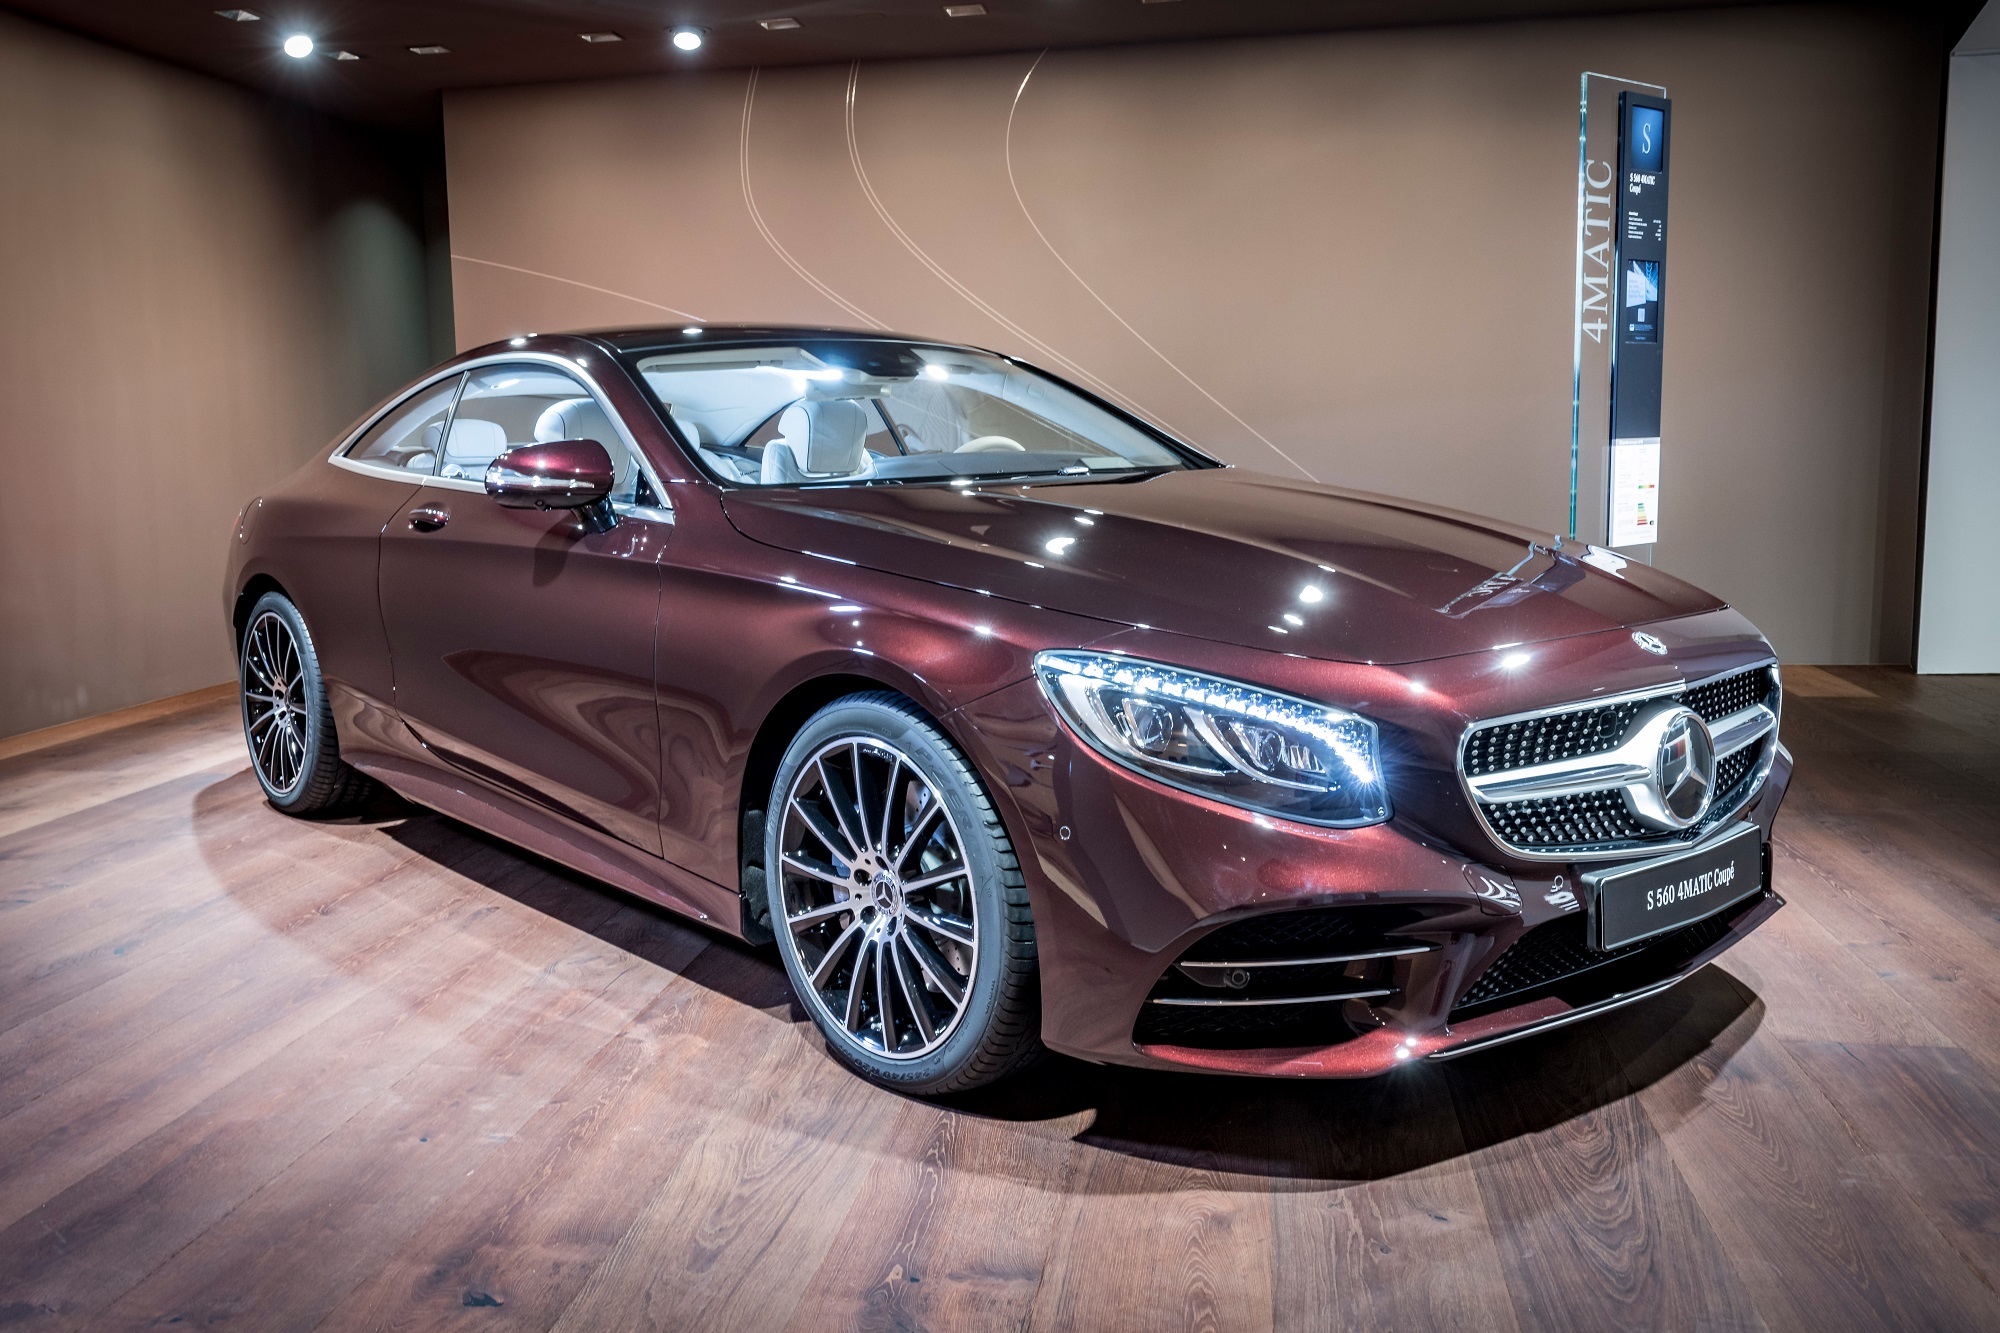 New 2019 MercedesBenz SClass Exclusive Edition Announced MBWorld